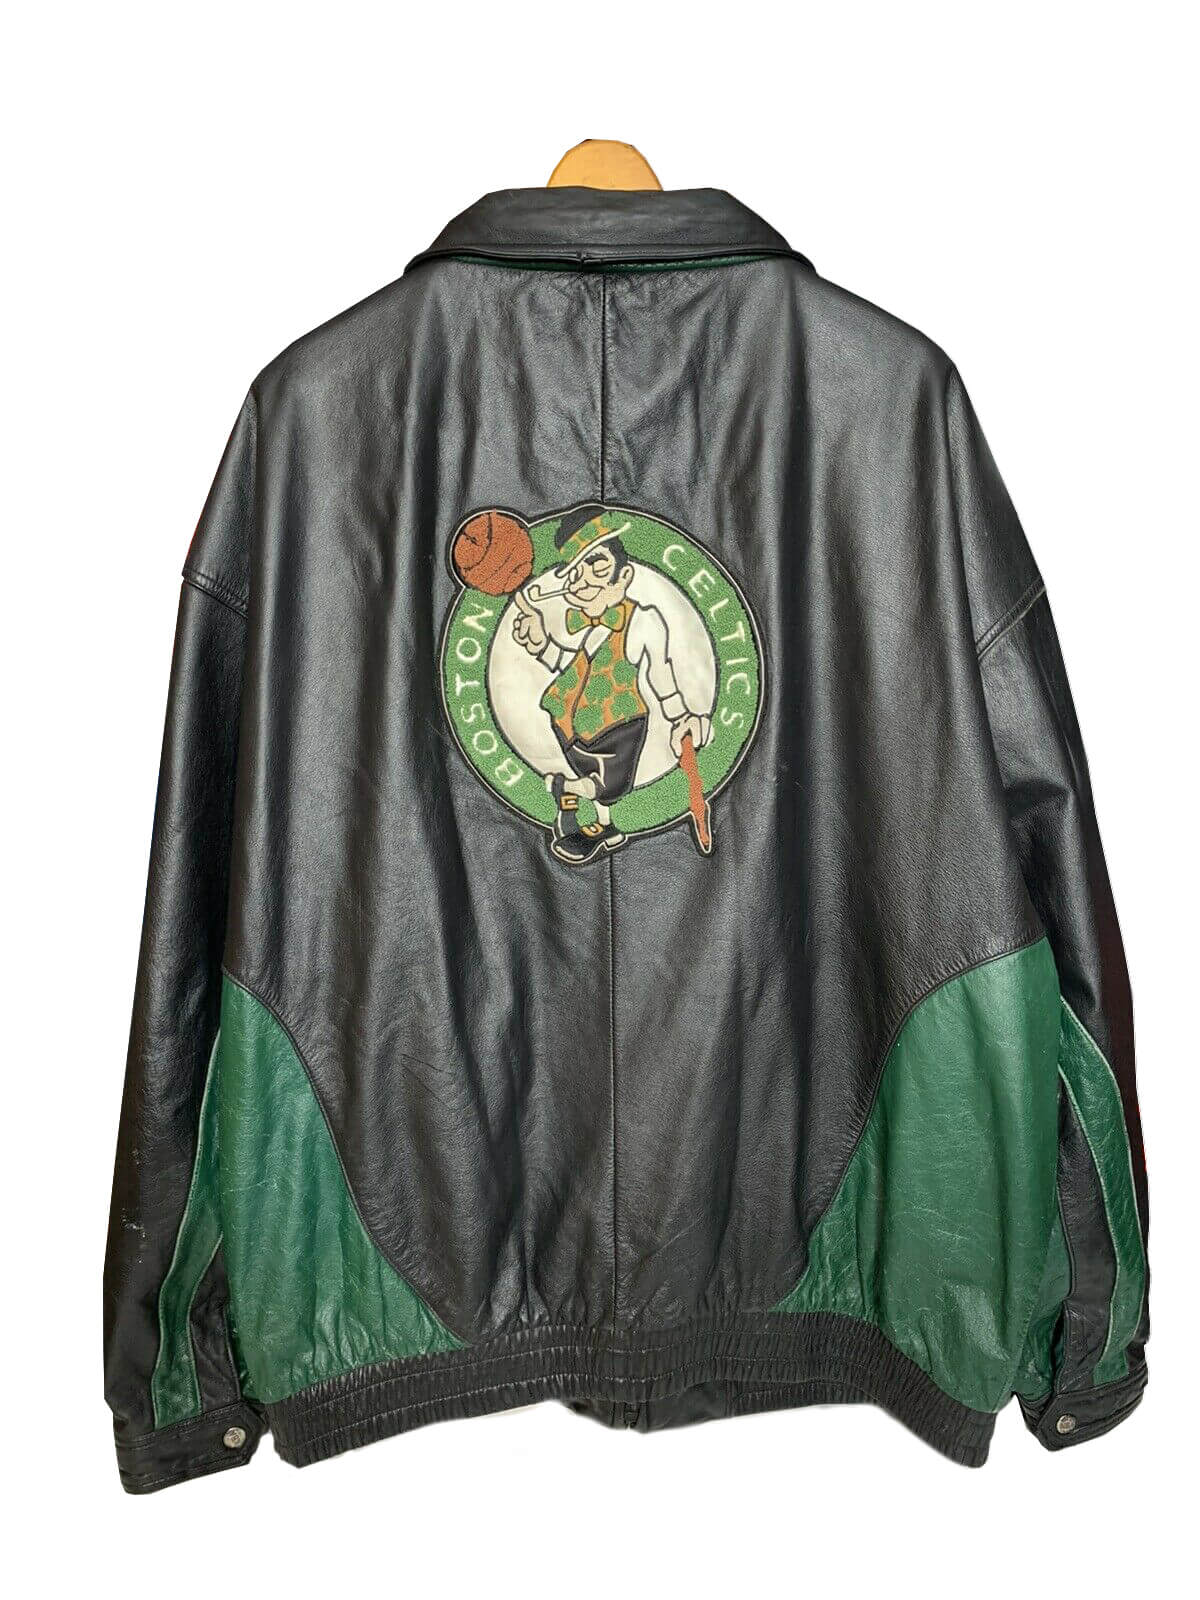 Boston Celtics Black Championship Jacket|Skinler